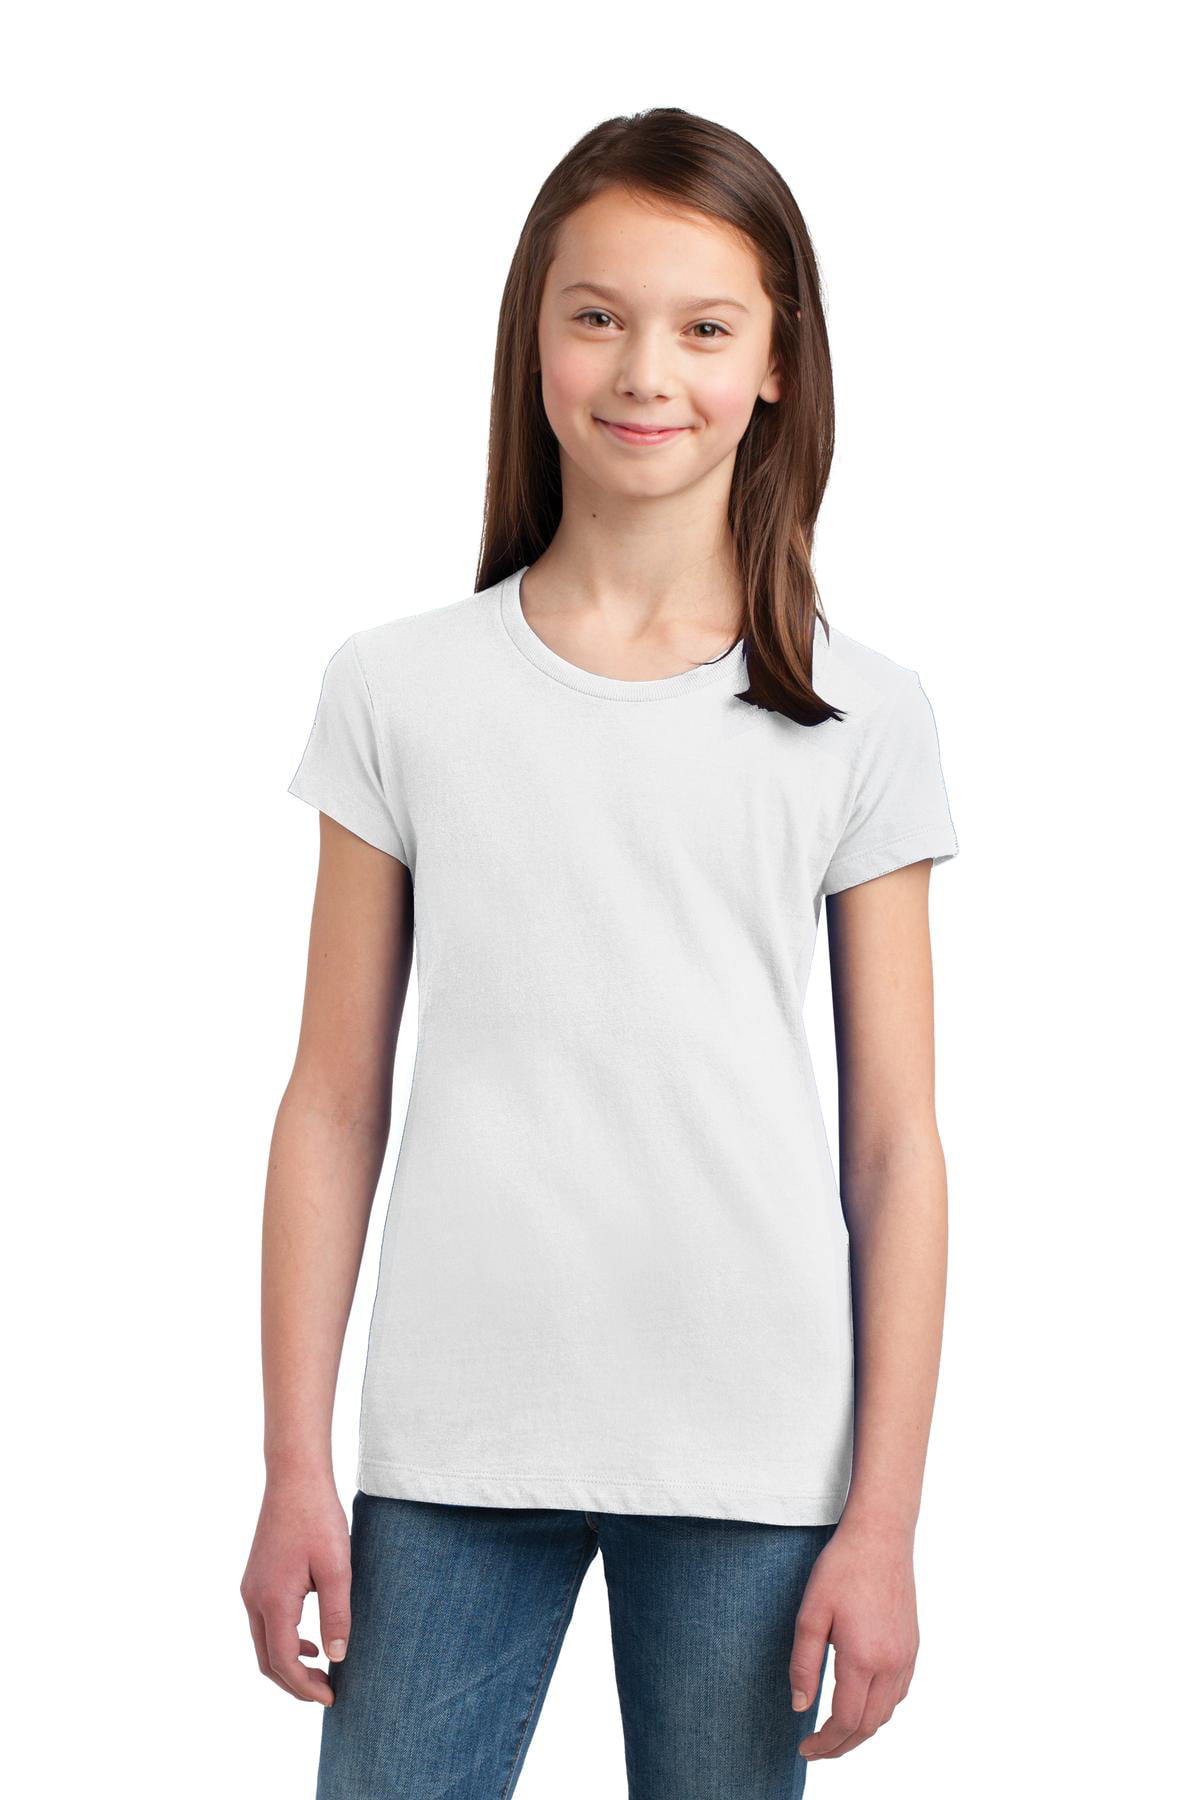 Shirt white girl. Футболку женскую для школа. 3505 Футболка. T-Shirt для девочек софт. Детские футболки фасоны.